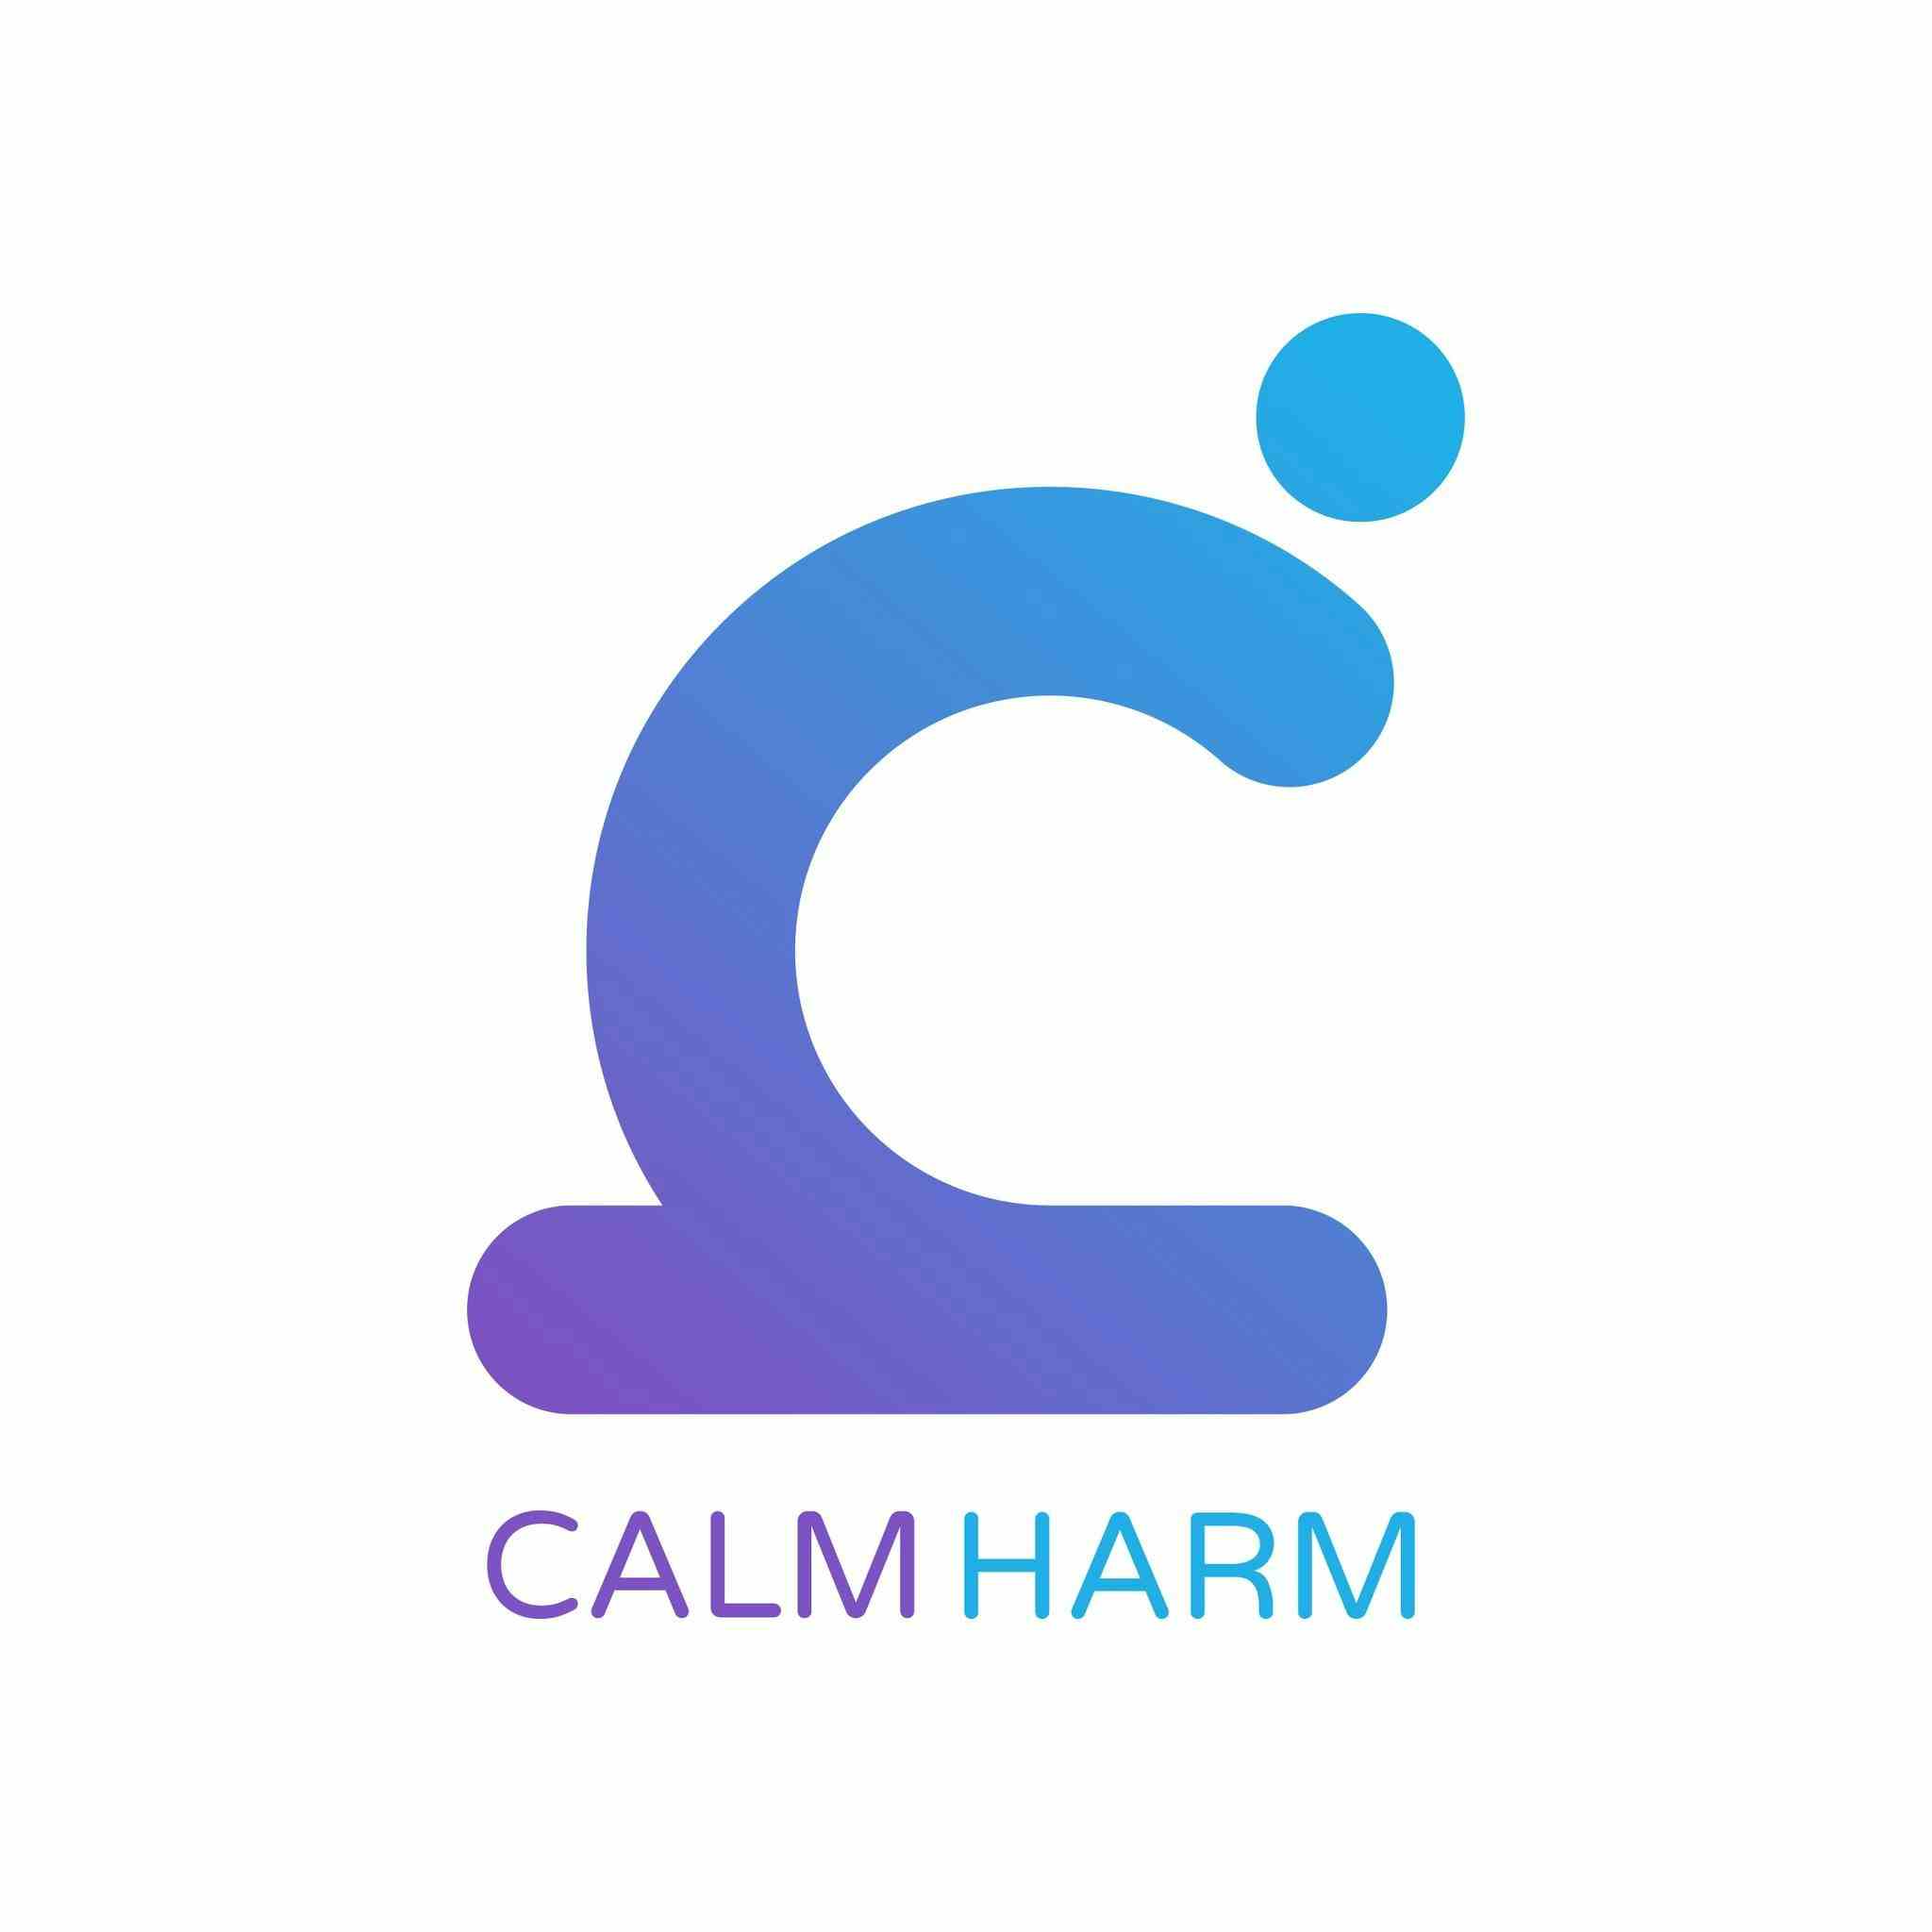 Calm Harm logo